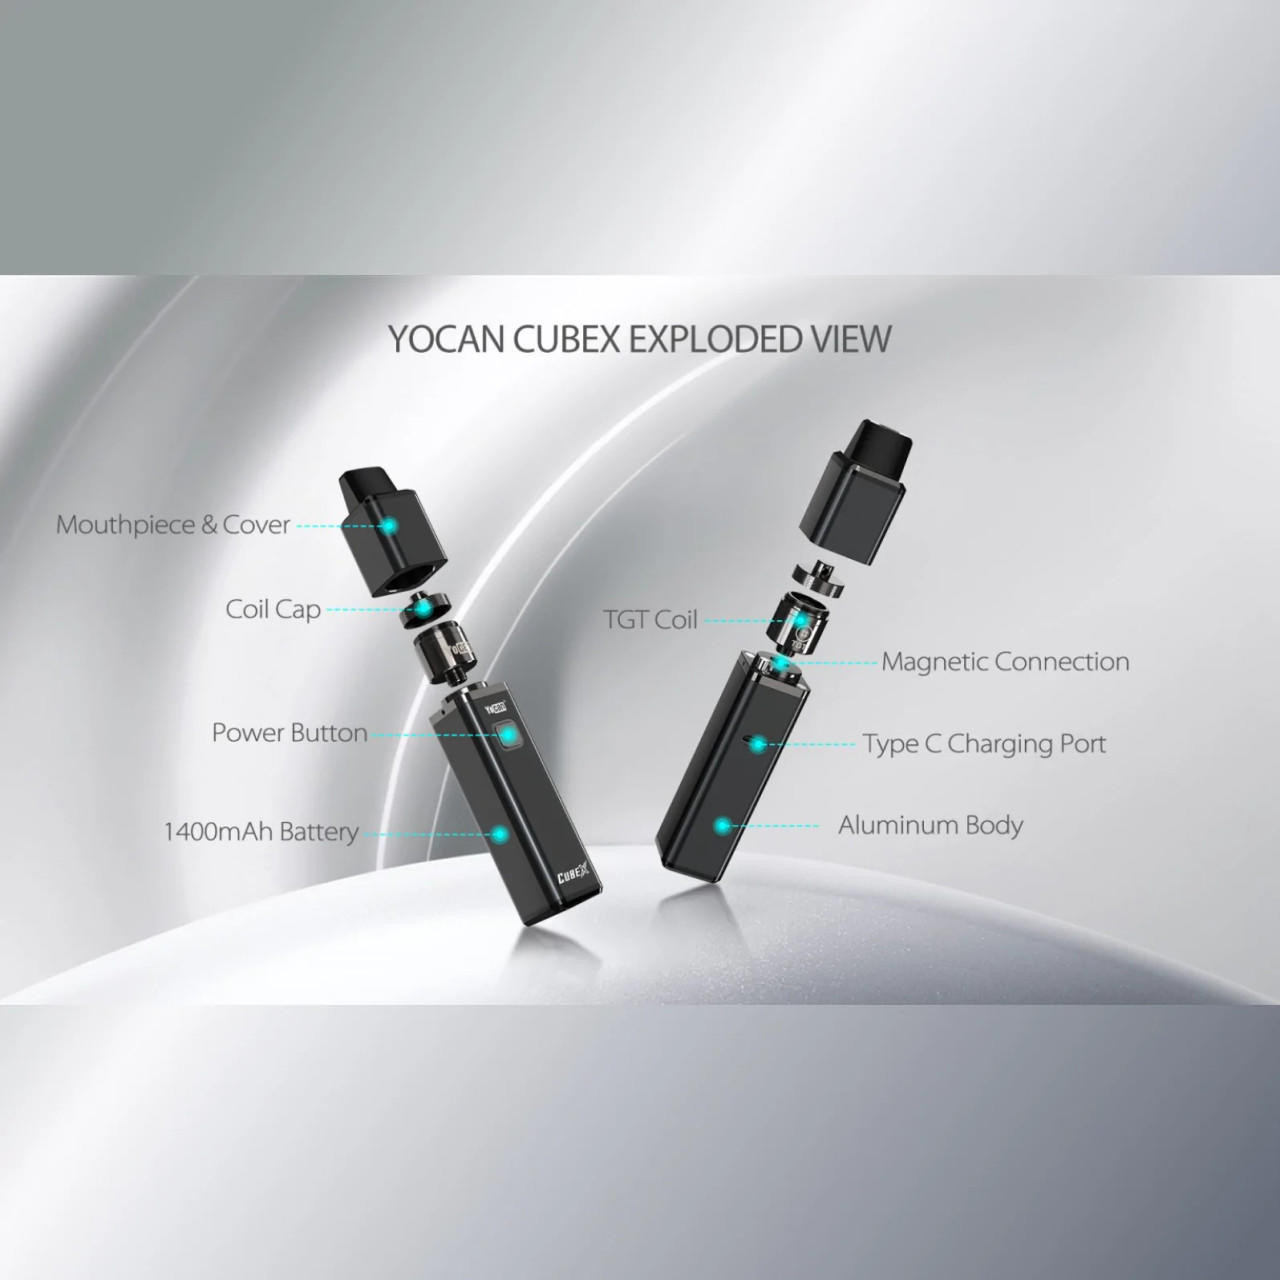 Yocan X Pod System Starter Kit  Yocan X Concentrate Vaporizer